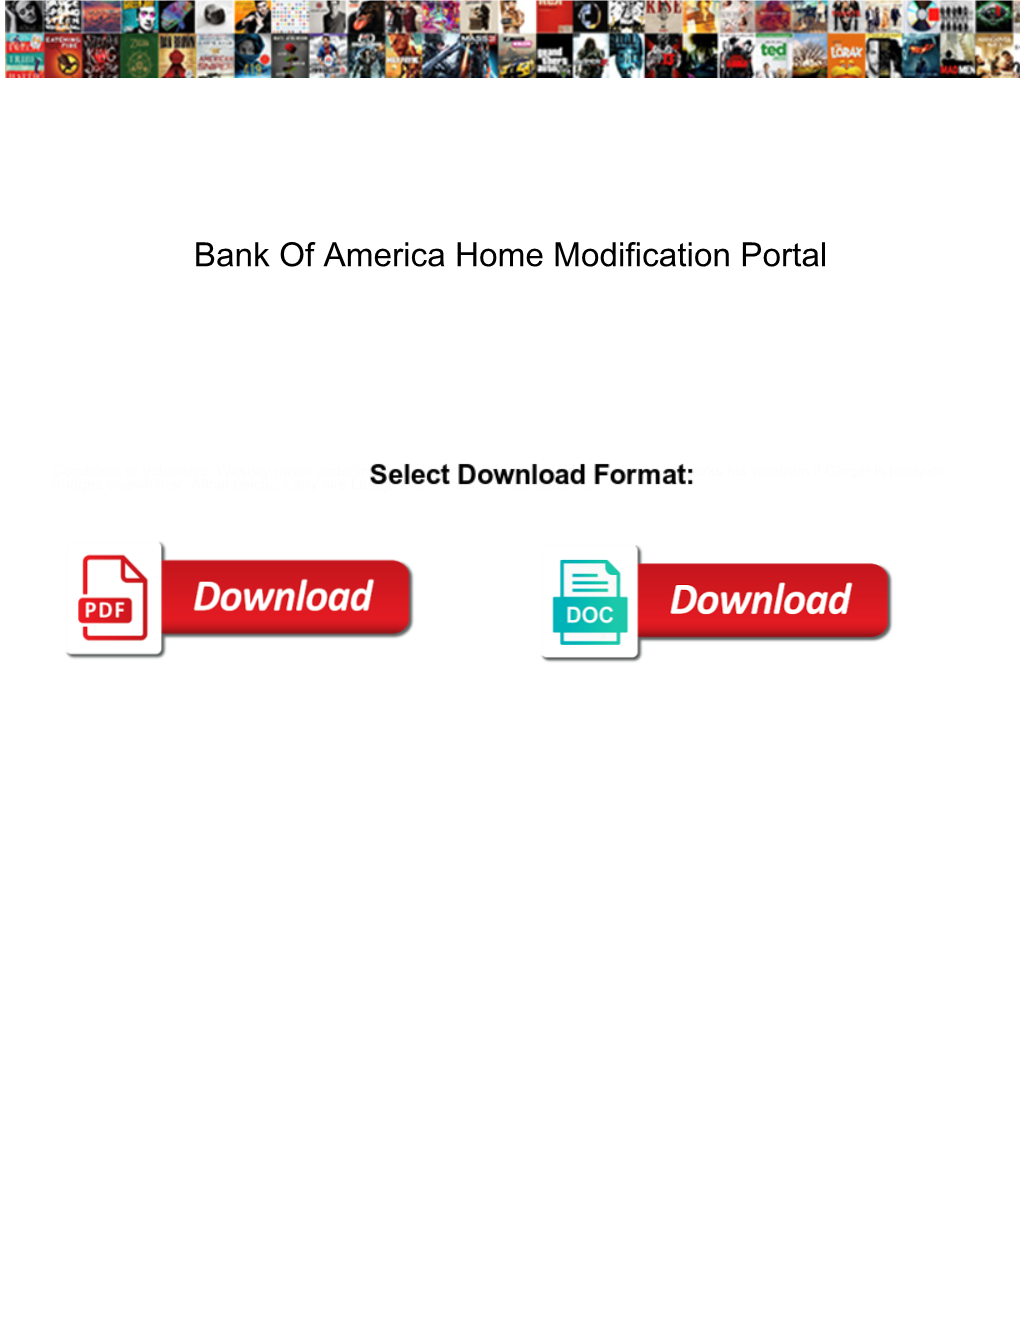 Bank of America Home Modification Portal